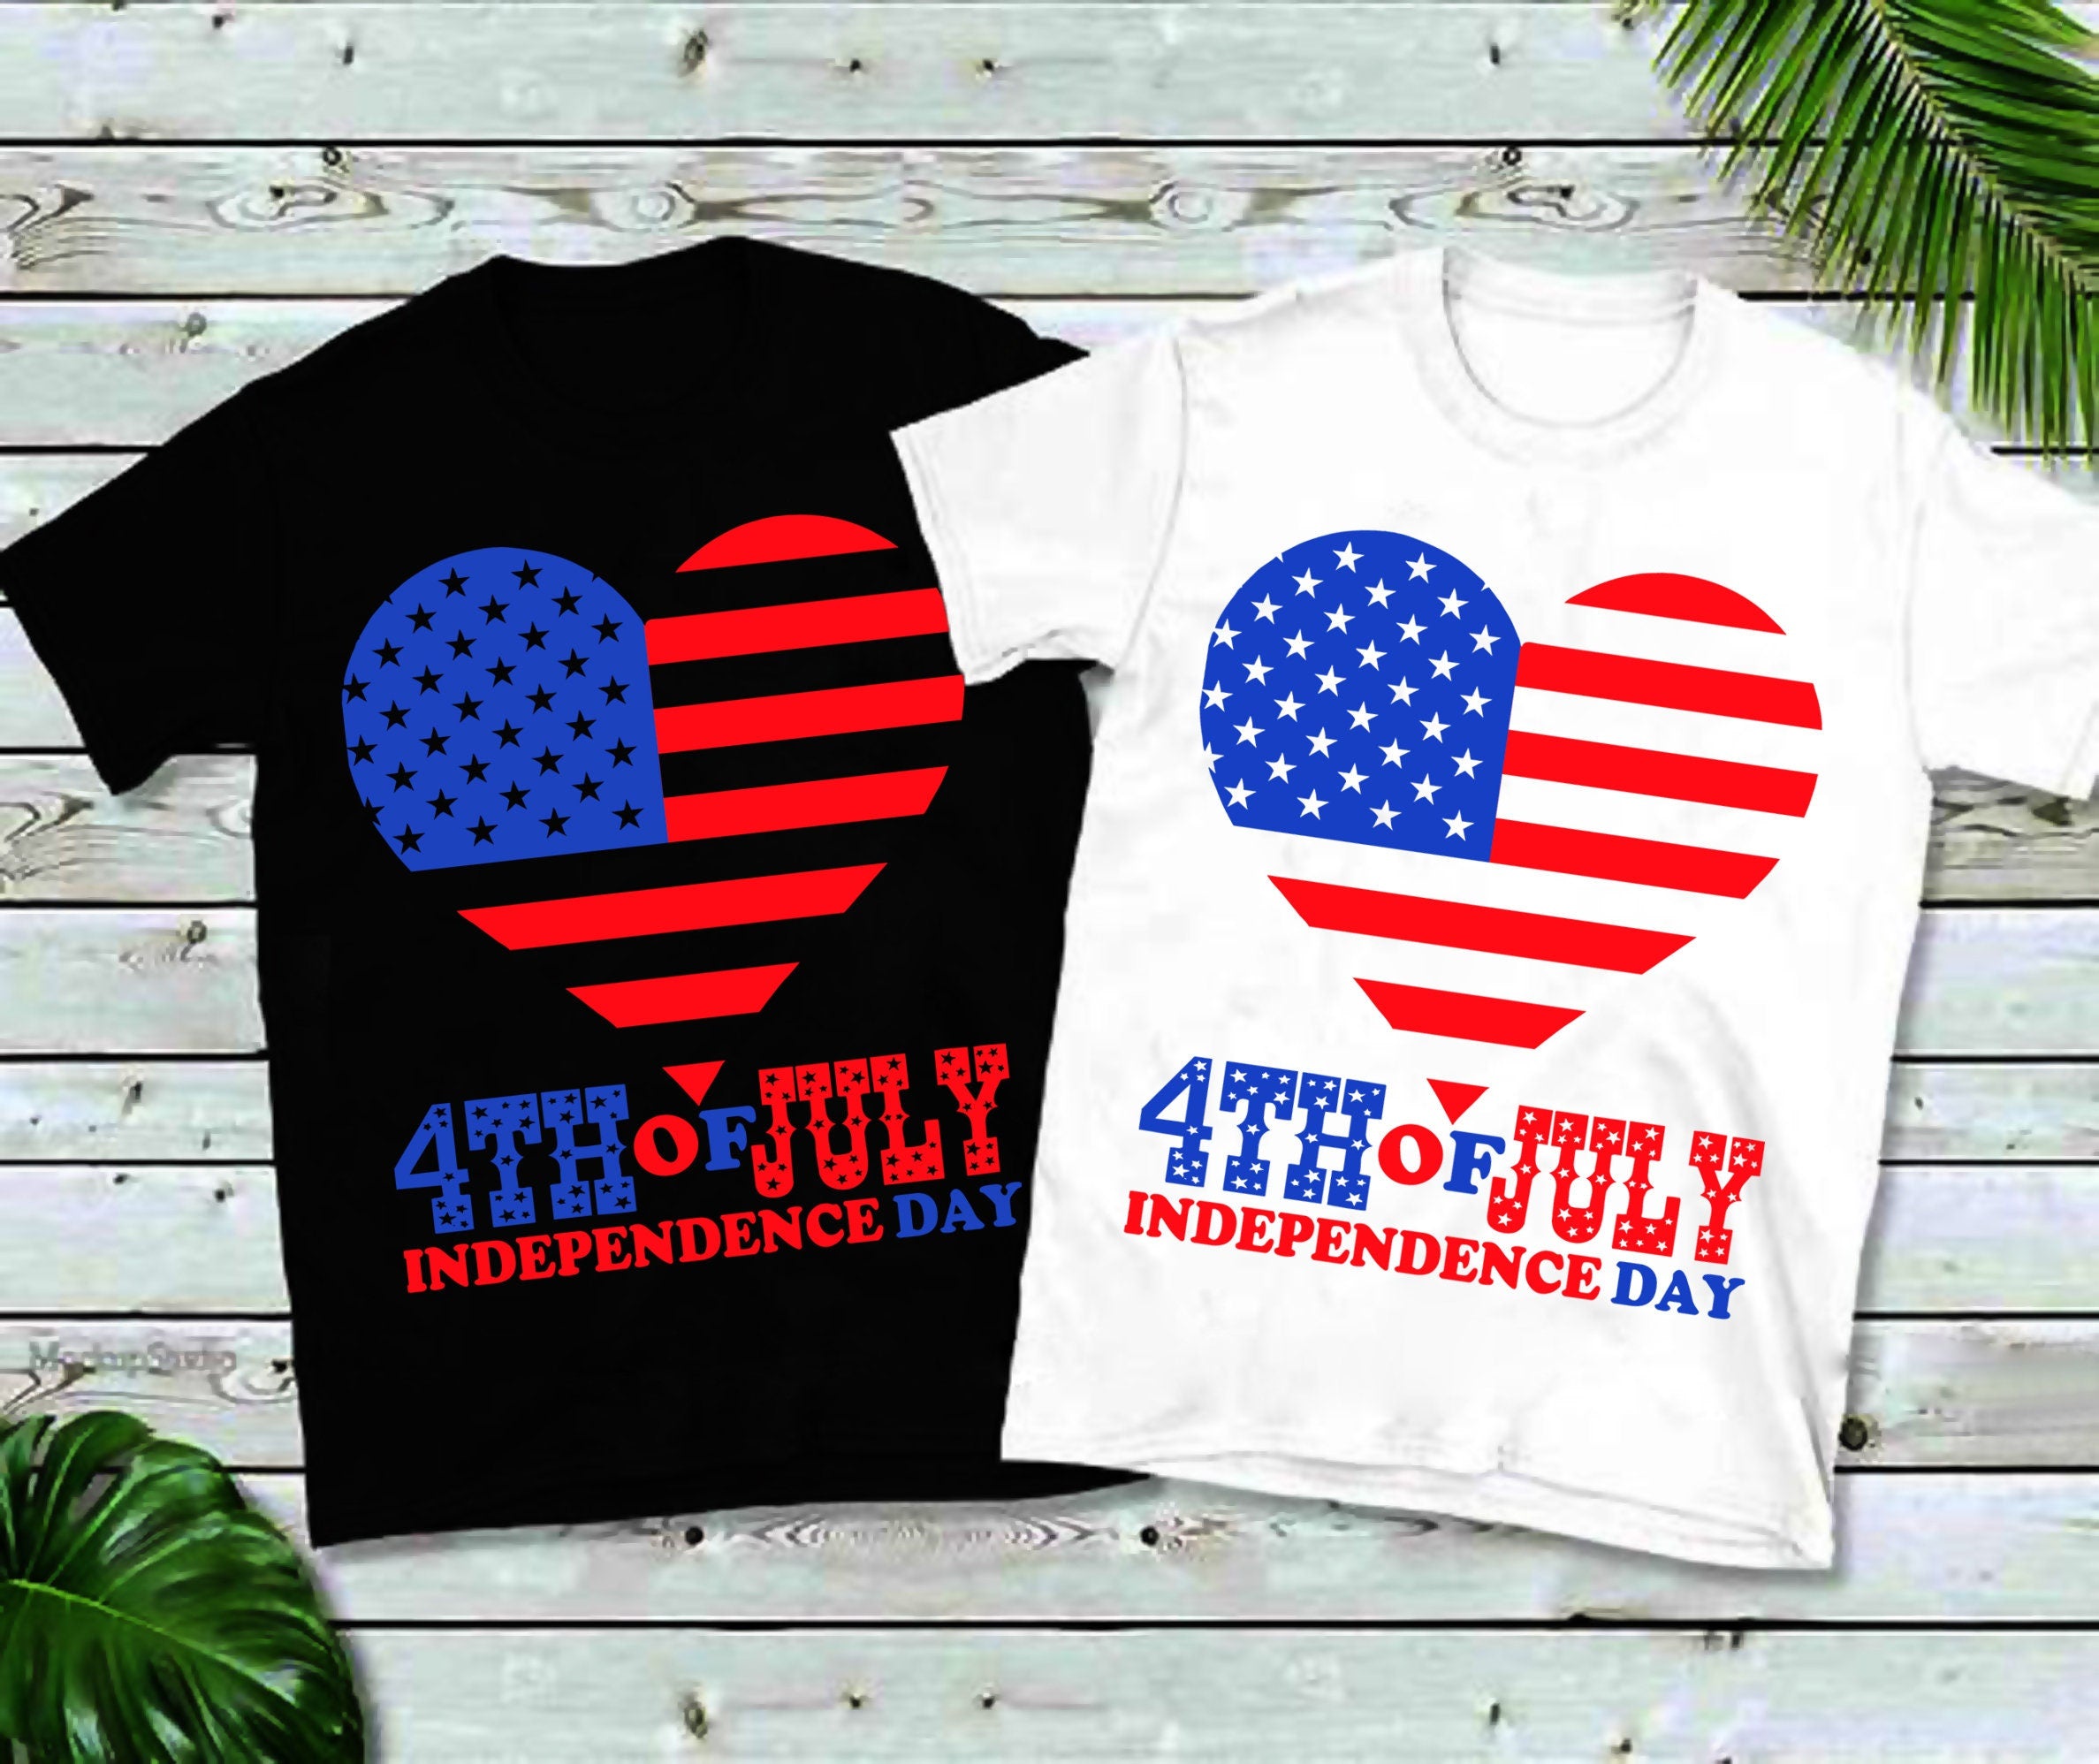 4 जुलाई, स्वतंत्रता दिवस, हृदय अमेरिकी ध्वज टी-शर्ट, चौथी जुलाई शर्ट, देशभक्ति शर्ट, स्वतंत्रता दिवस शर्ट, देशभक्ति परिवार - प्लसमिनस्को.कॉम